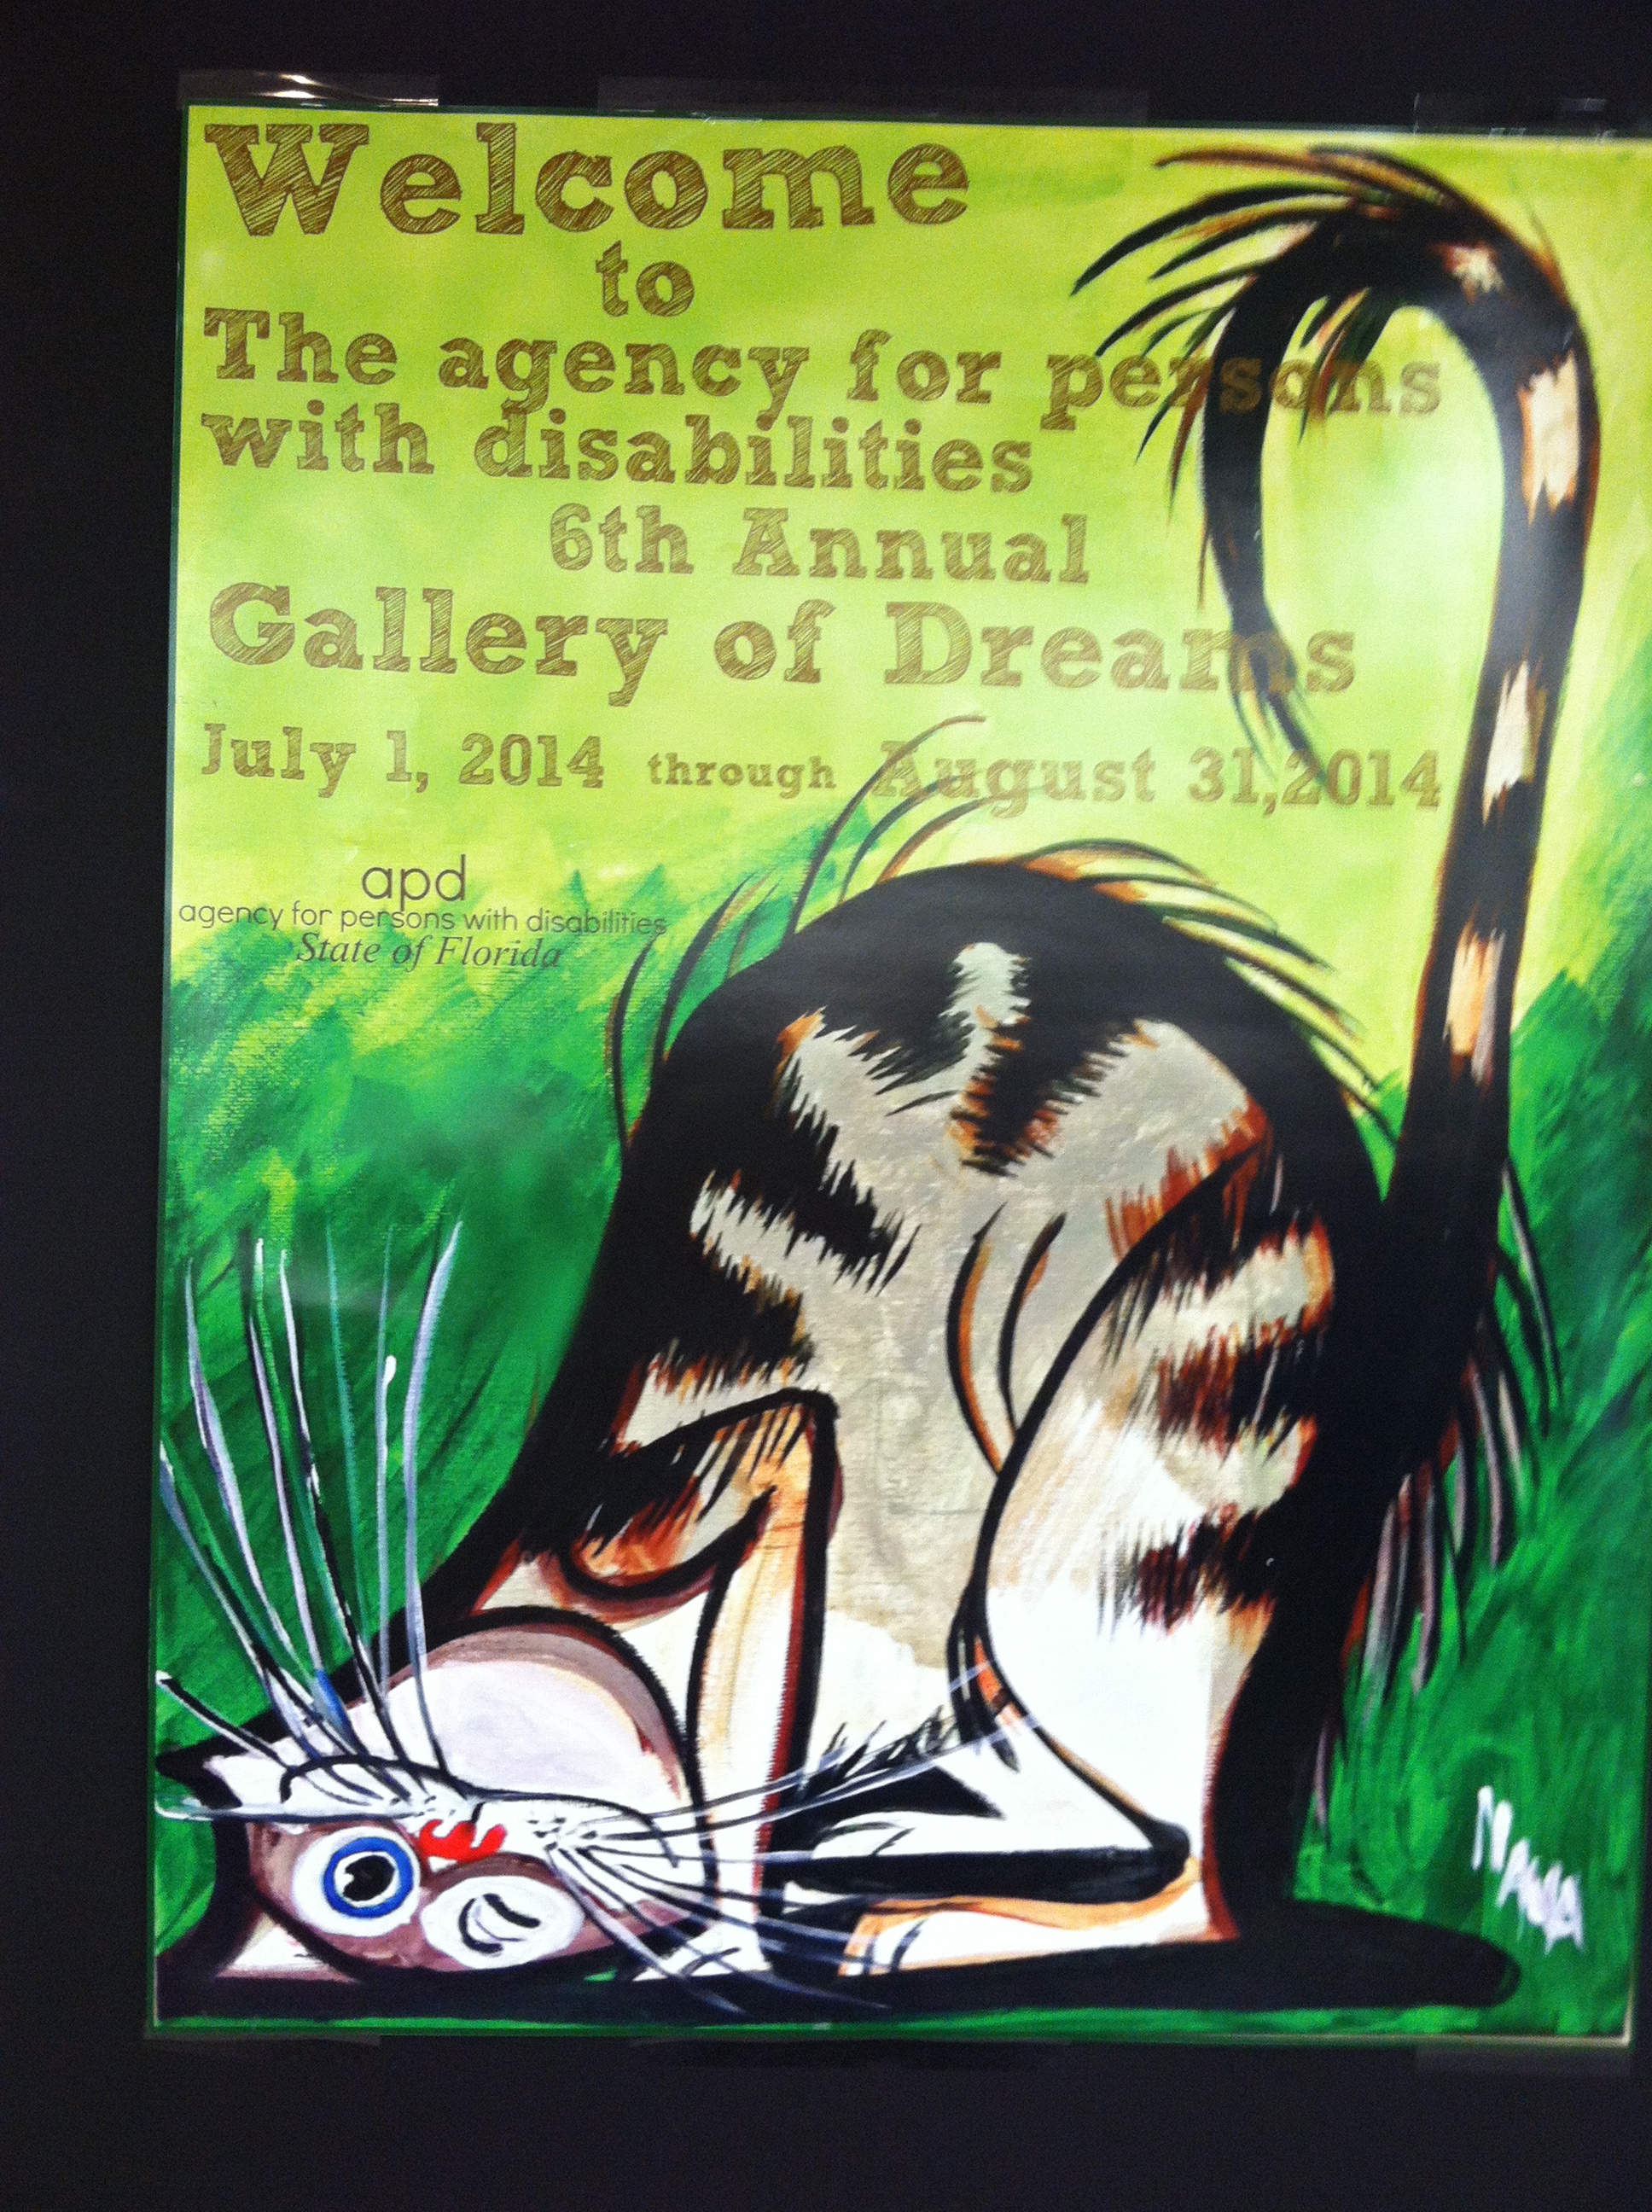 Gallery of Dreams poster 2014.